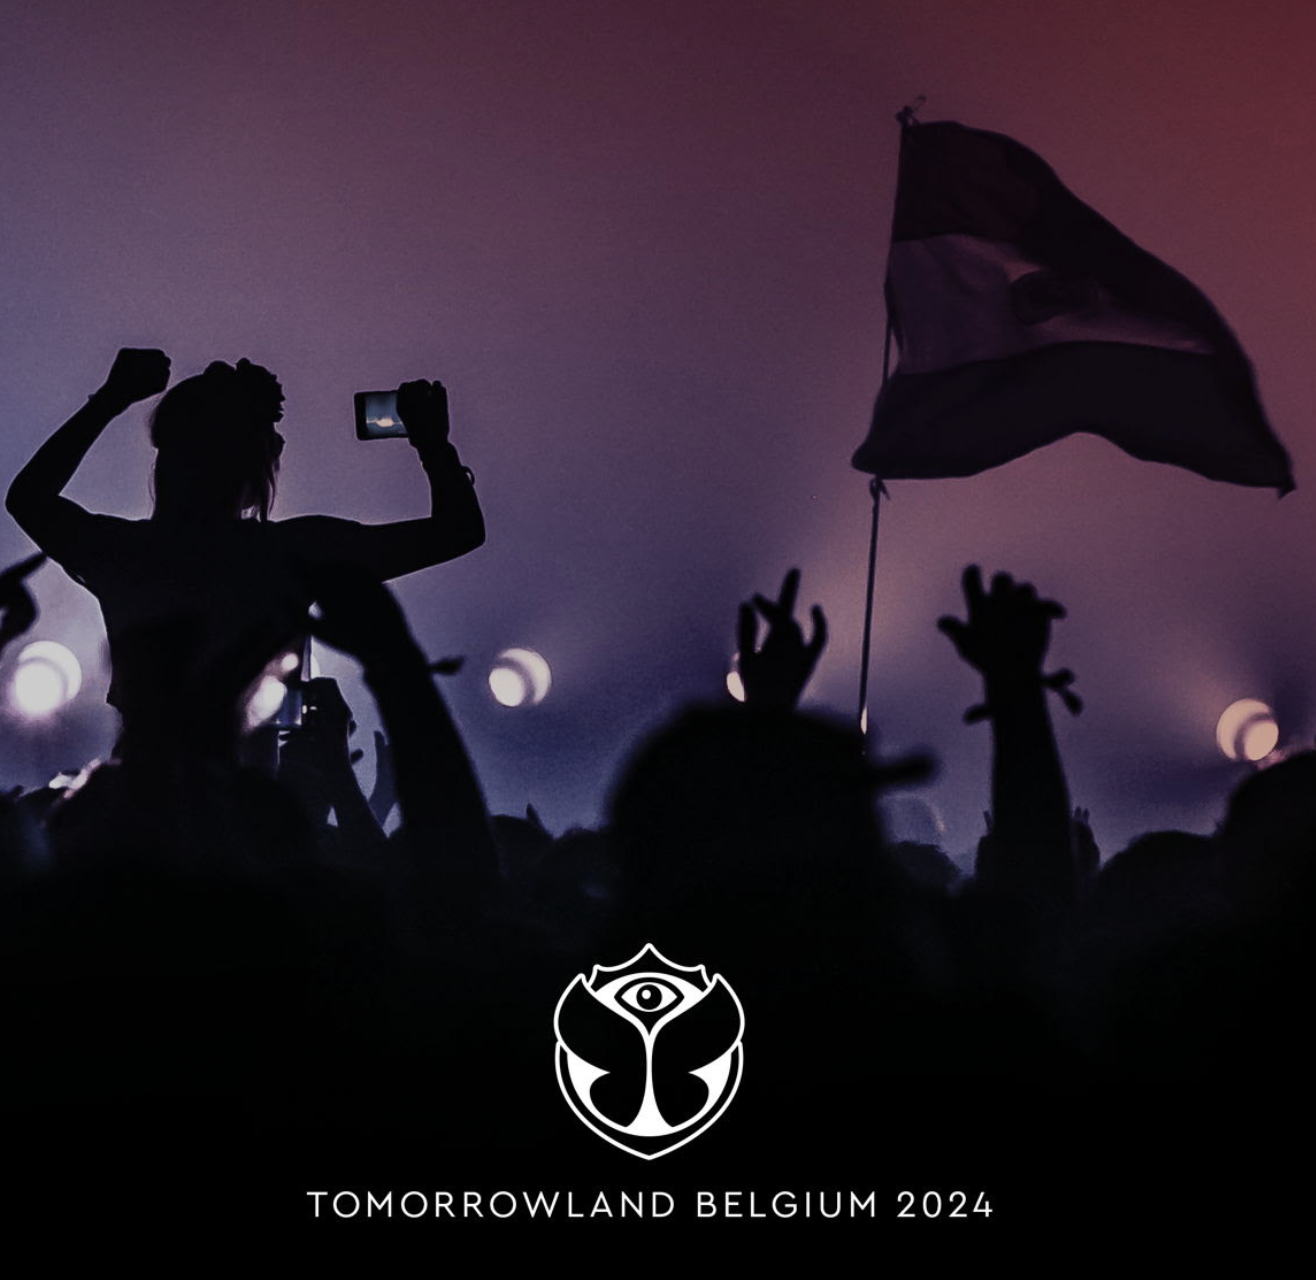 PreRegistration for Tomorrowland Belgium 2024 Is Now Open EDMTunes